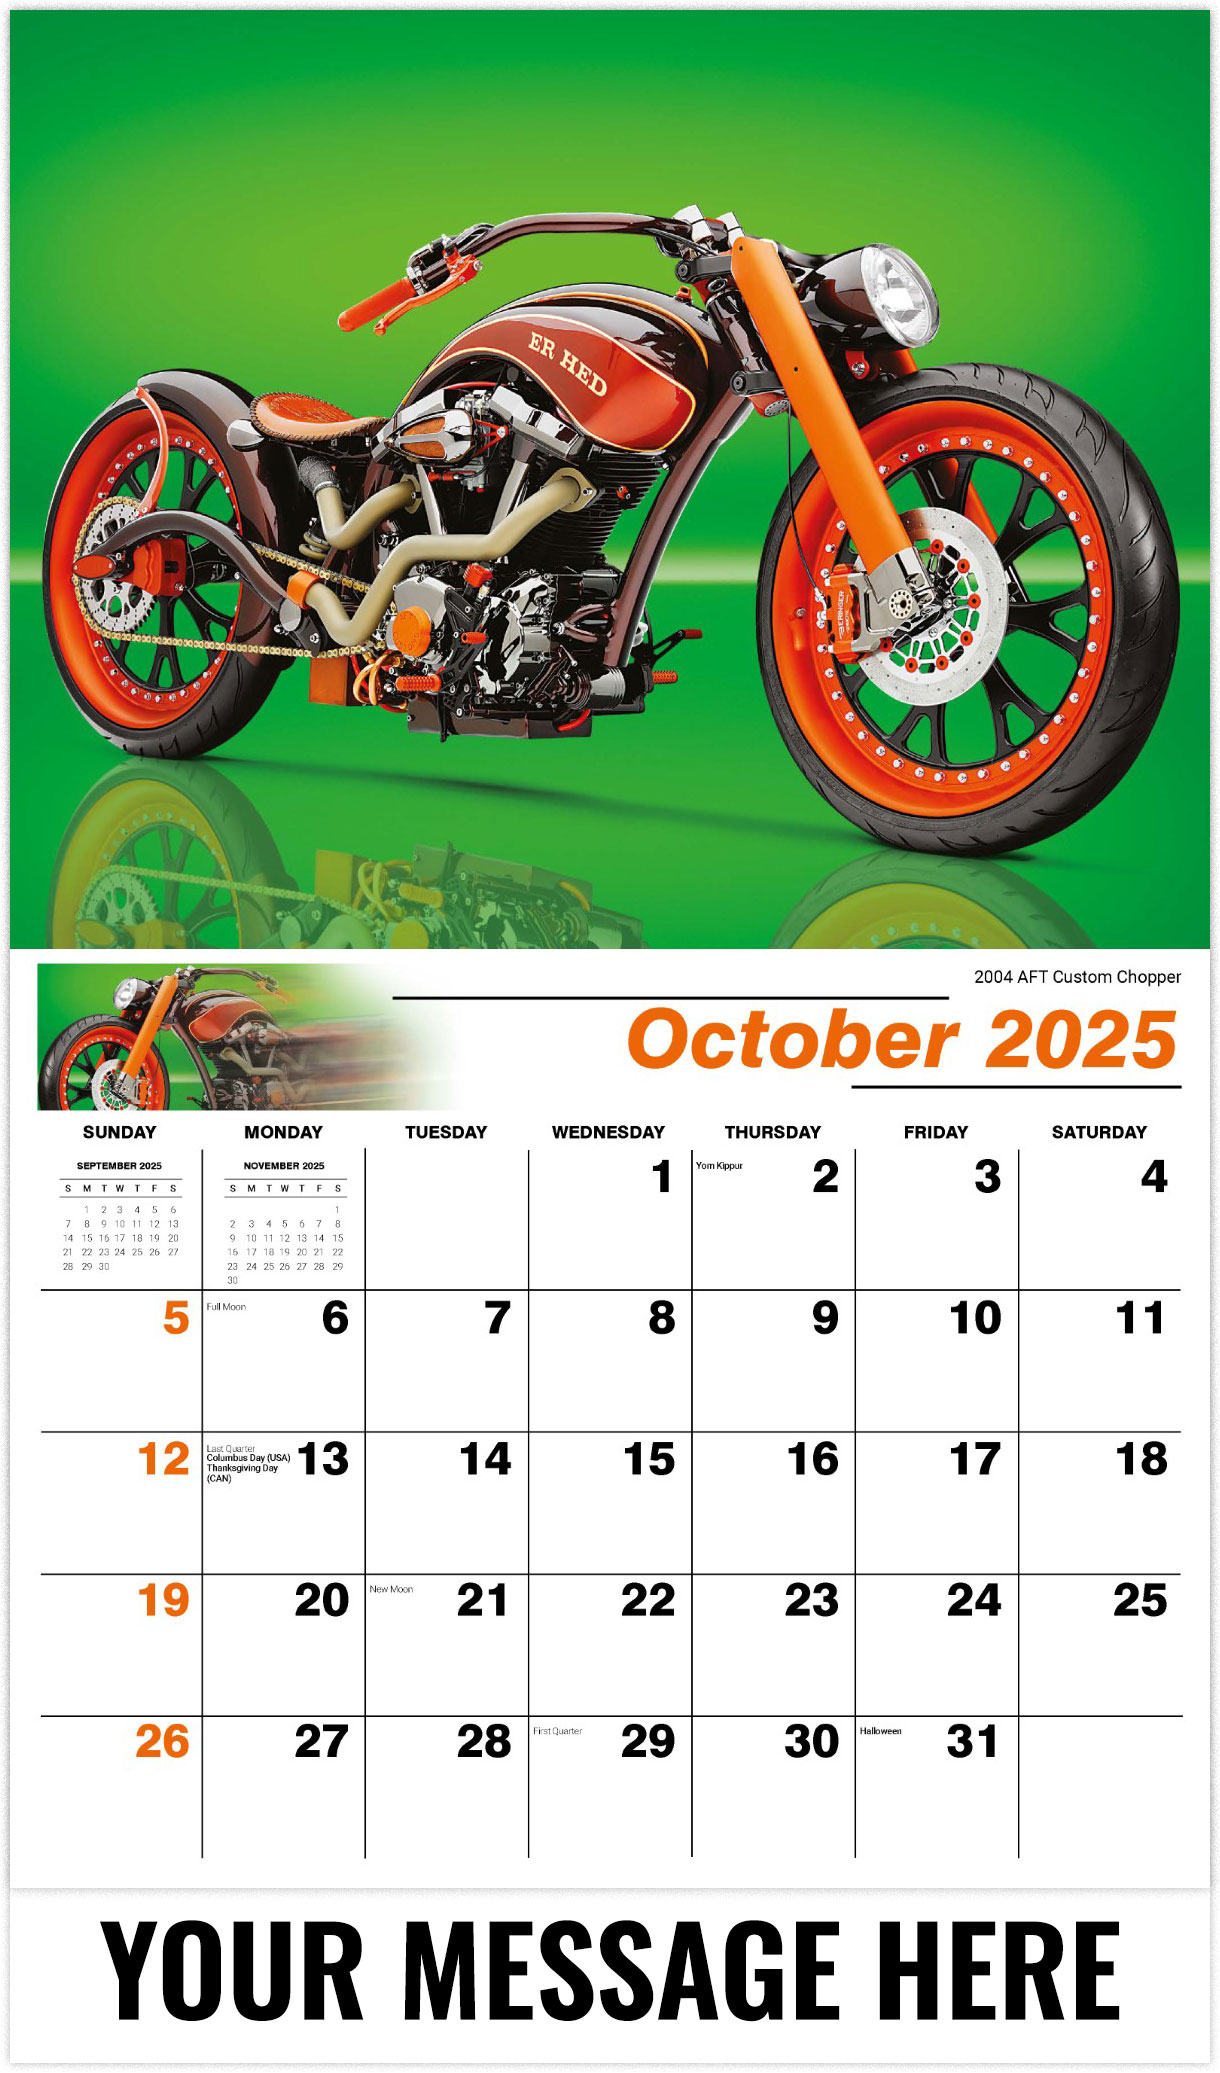 Galleria Motorcycle Mania - 2025